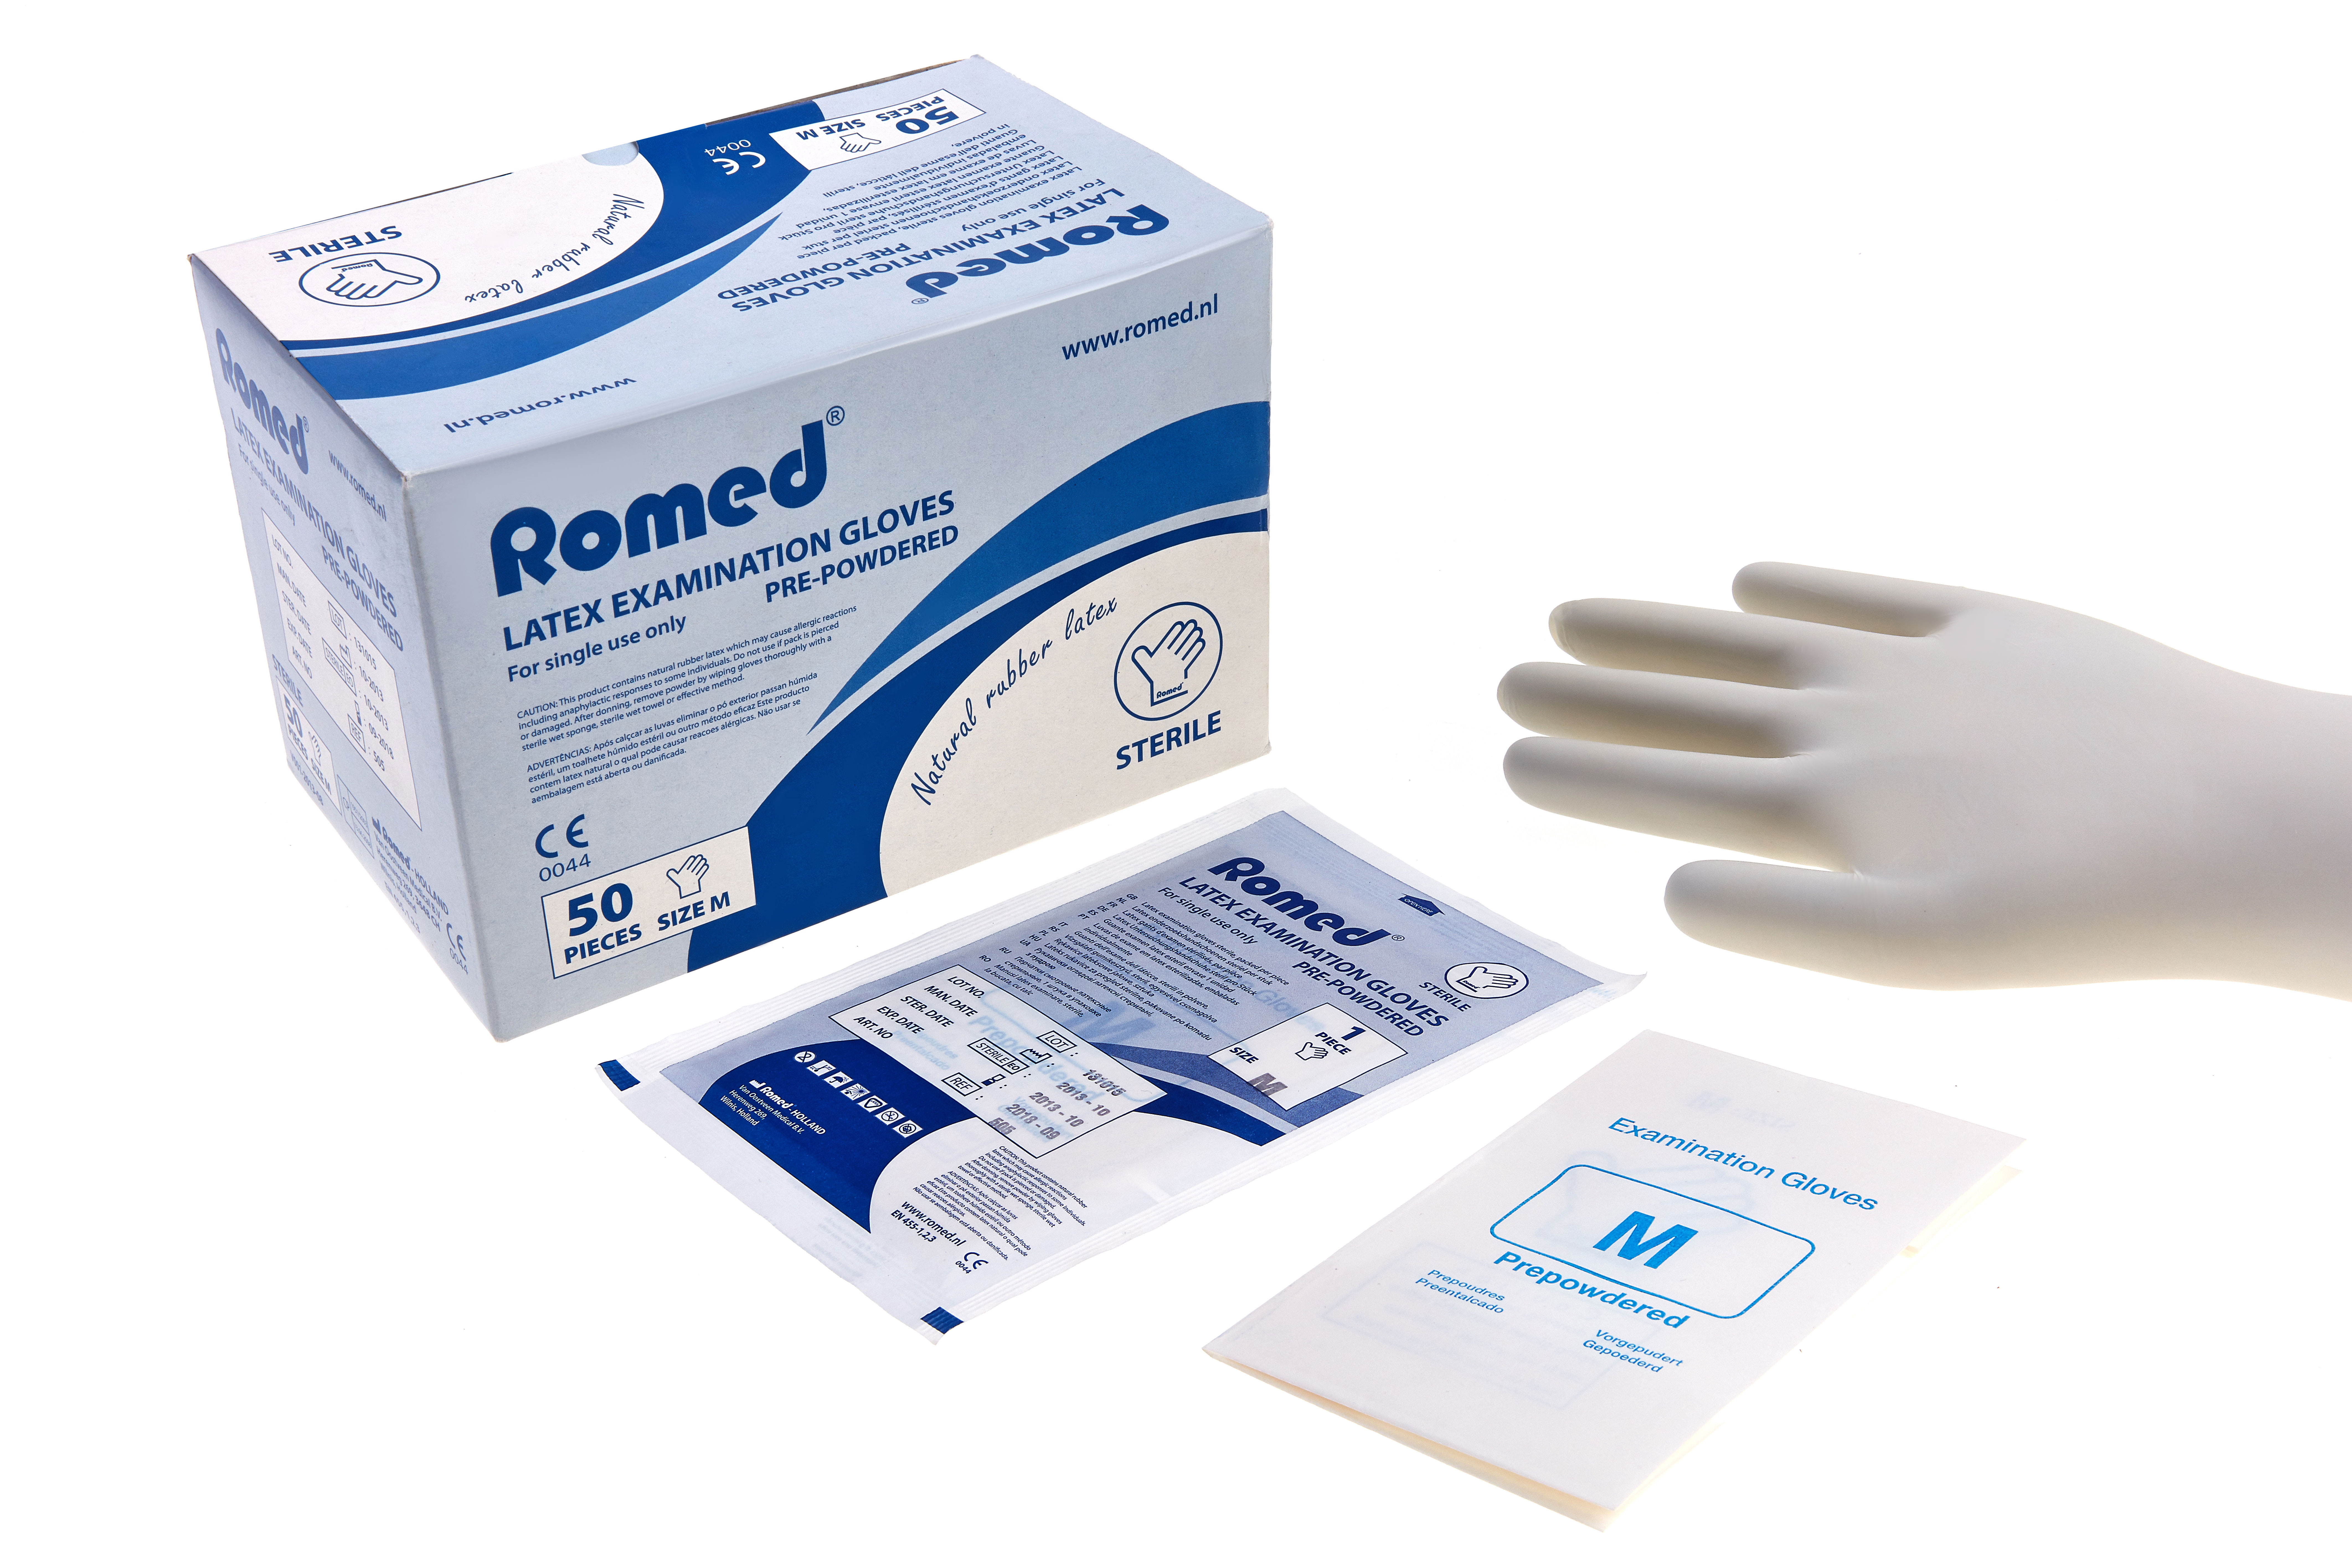 500 Romed latex examination gloves, sterile per piece, small, prepowdered, per 50 pcs in an inner box, 6 x 50 pcs = 300 pcs in a carton